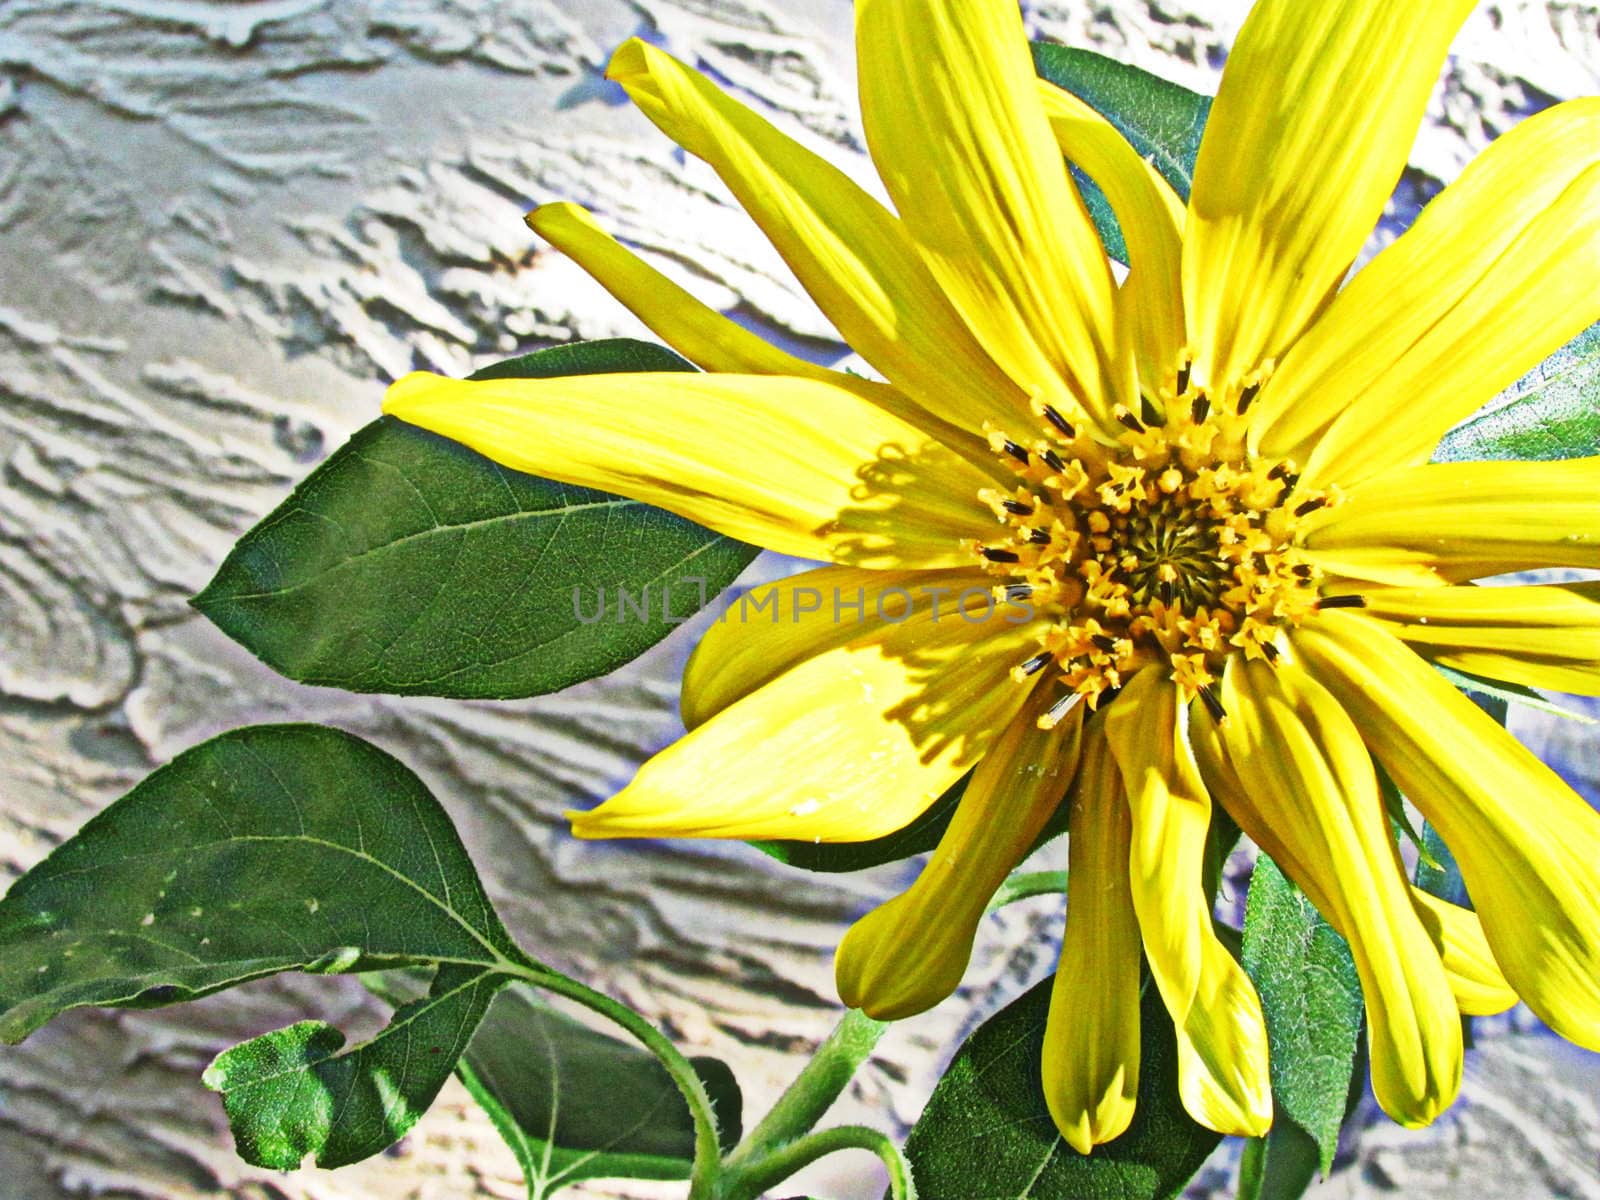 Immature sunflower in the backyard